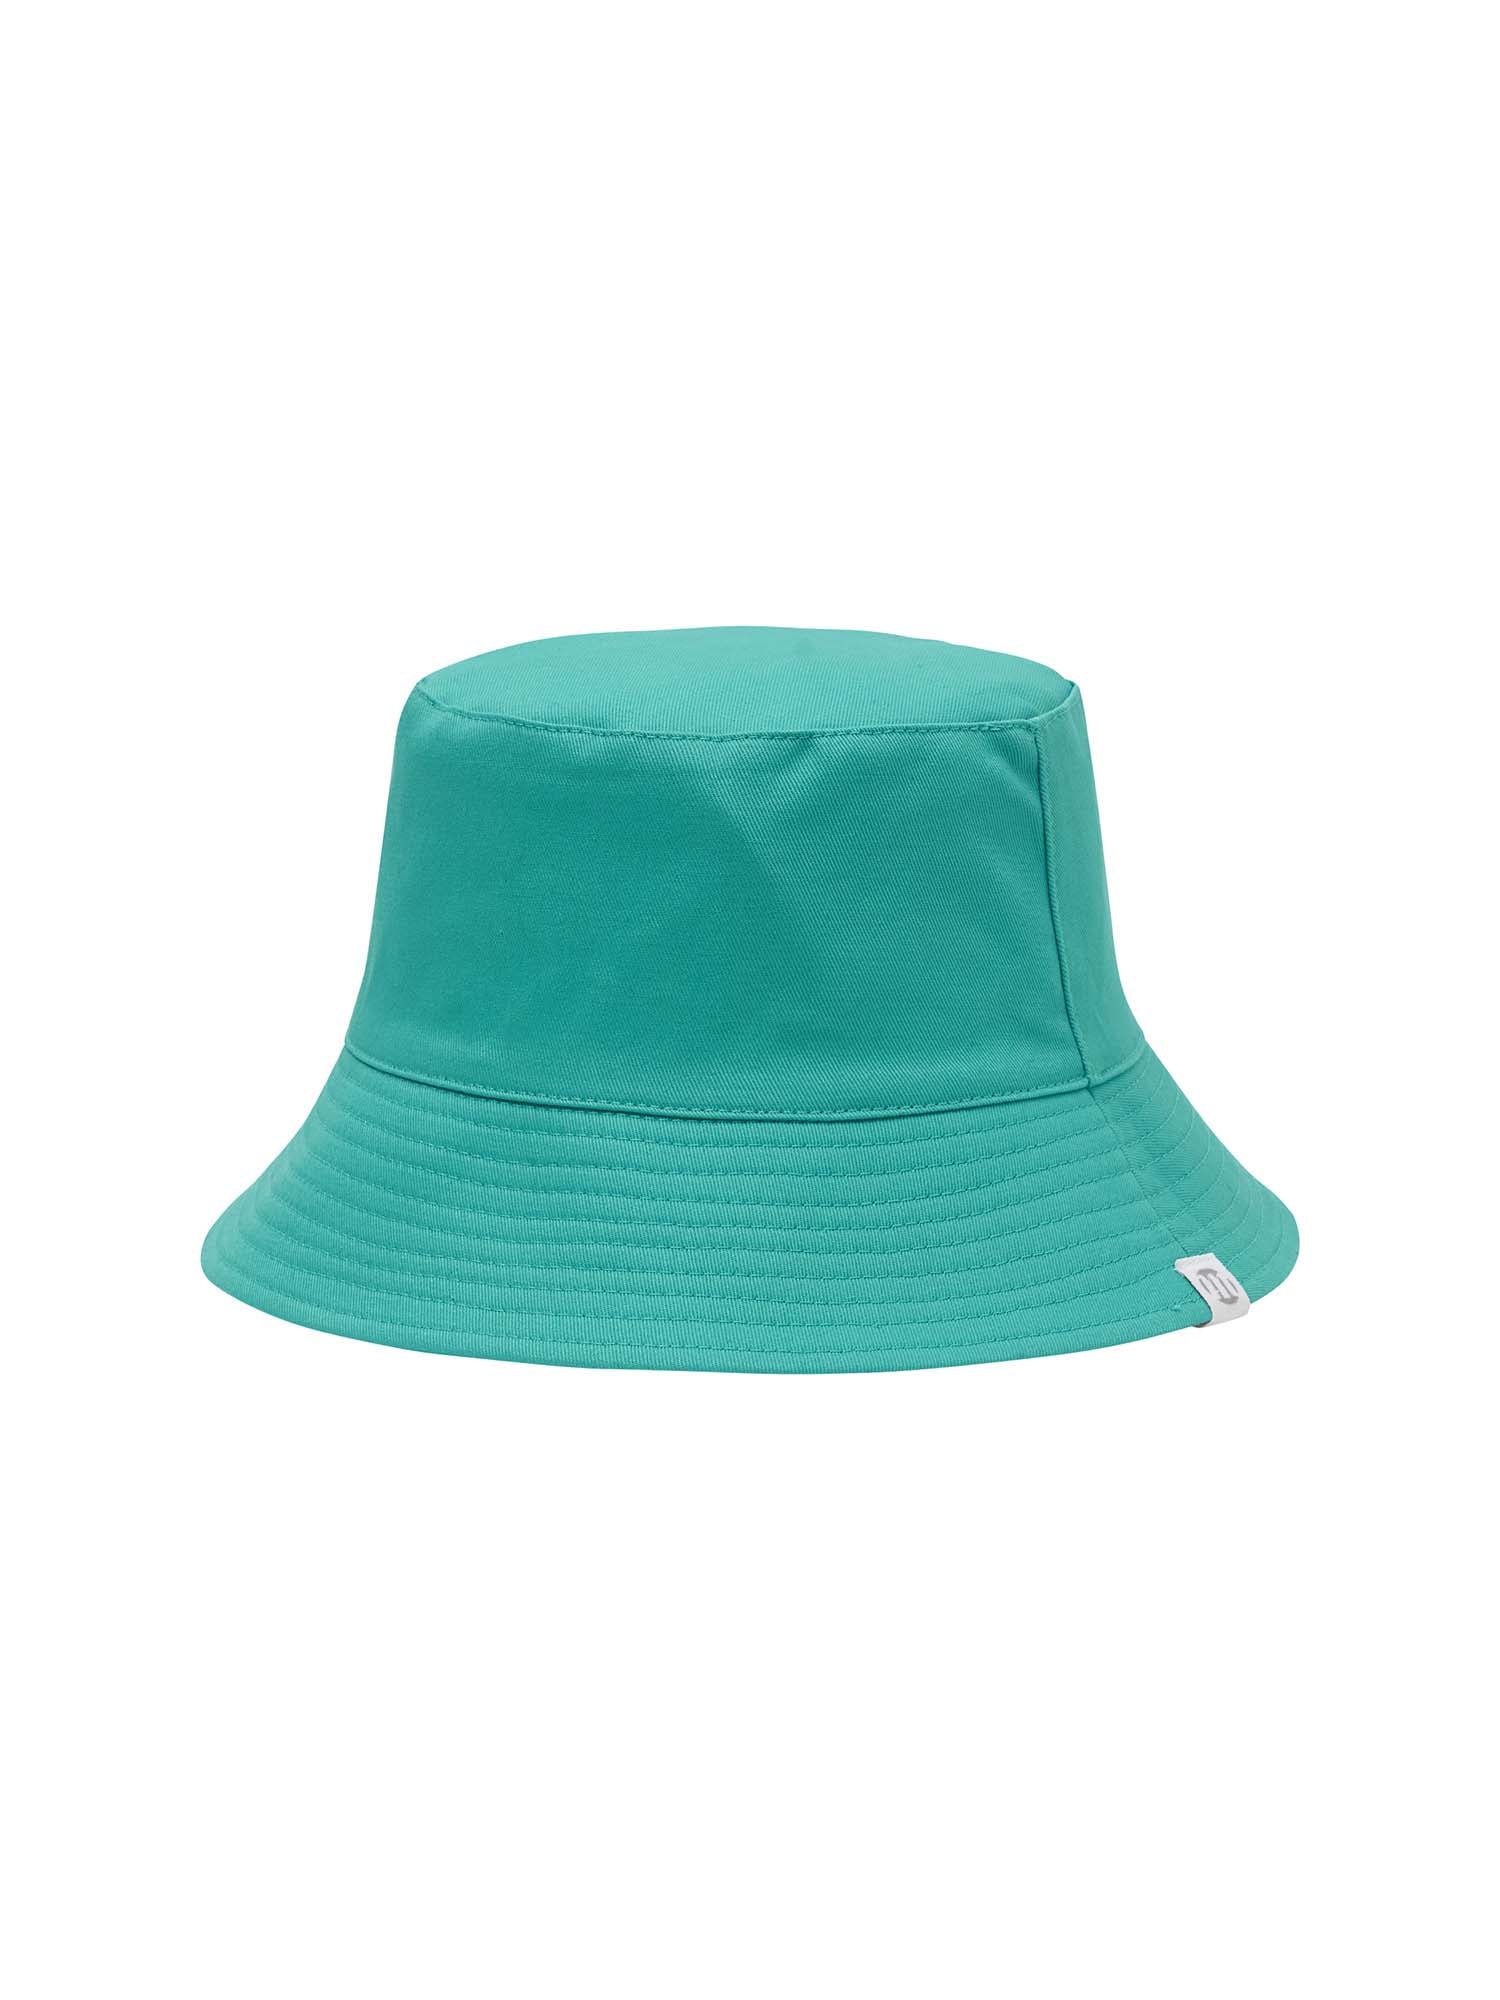 Prada logo-plaque bucket hat - Green